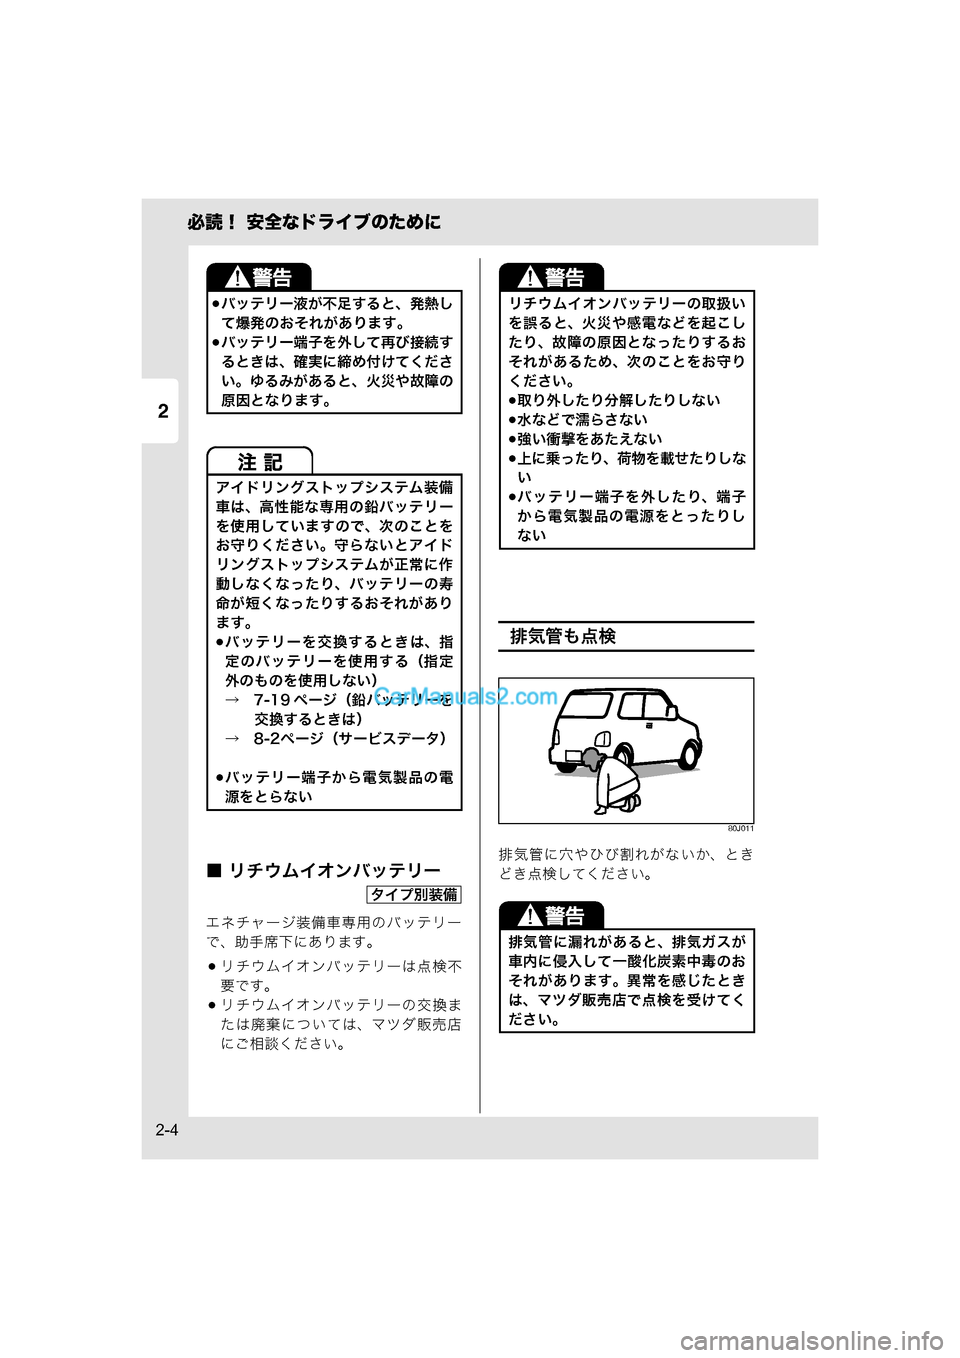 MAZDA MODEL CARROL 2015  取扱説明書 (キャロル) (in Japanese) 2
必読！ 安全なドライブのために
2-4
■ リチウムイオンバッテリー
エネチャージ装備車専用のバッテリー
で、助手席下にあります。
リチウムイ�